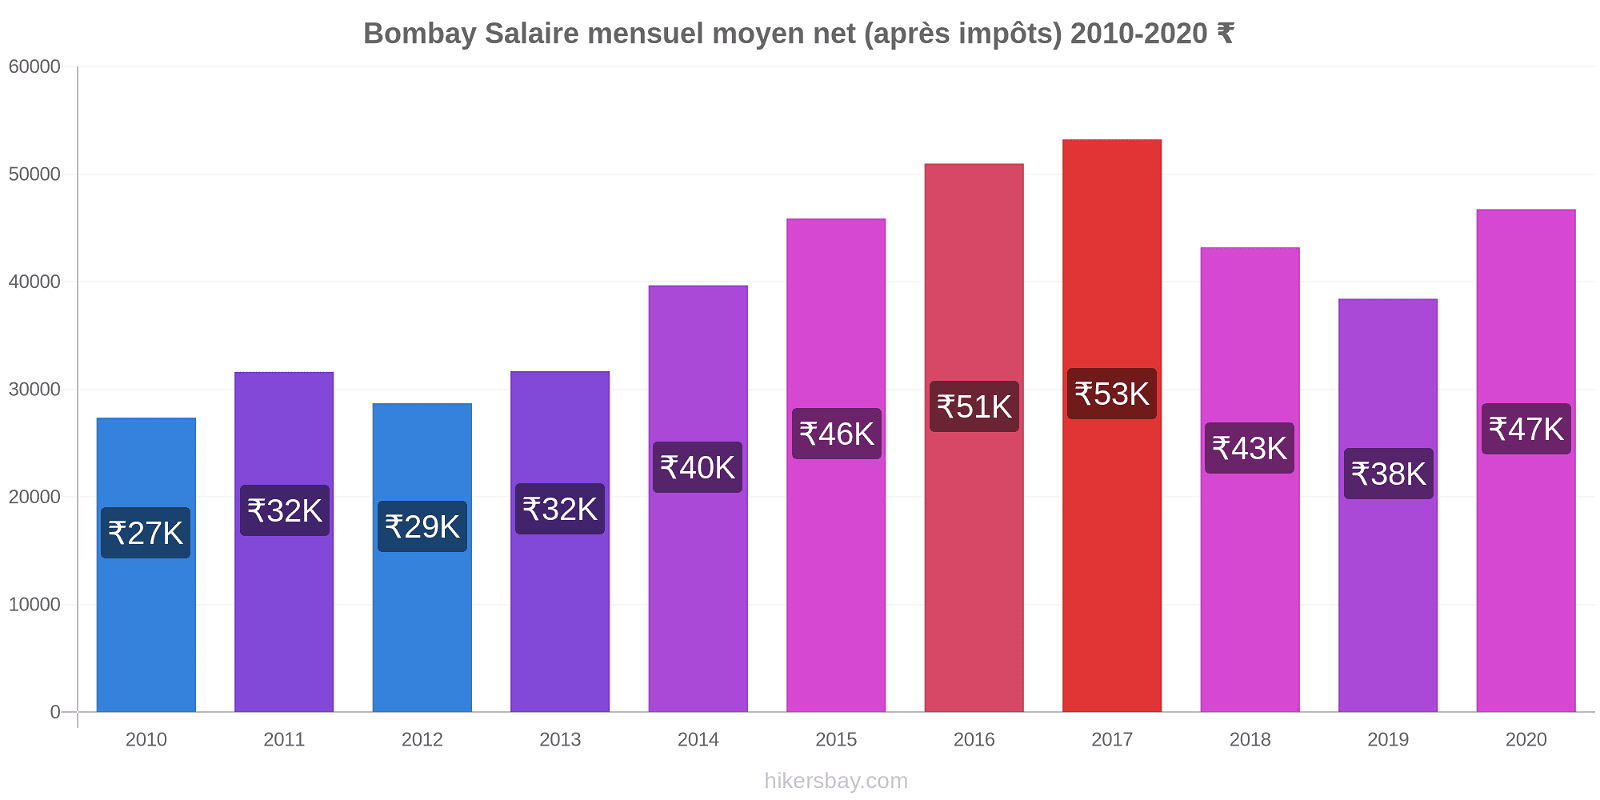 Bombay changements de prix Salaire mensuel Net (après impôts) hikersbay.com